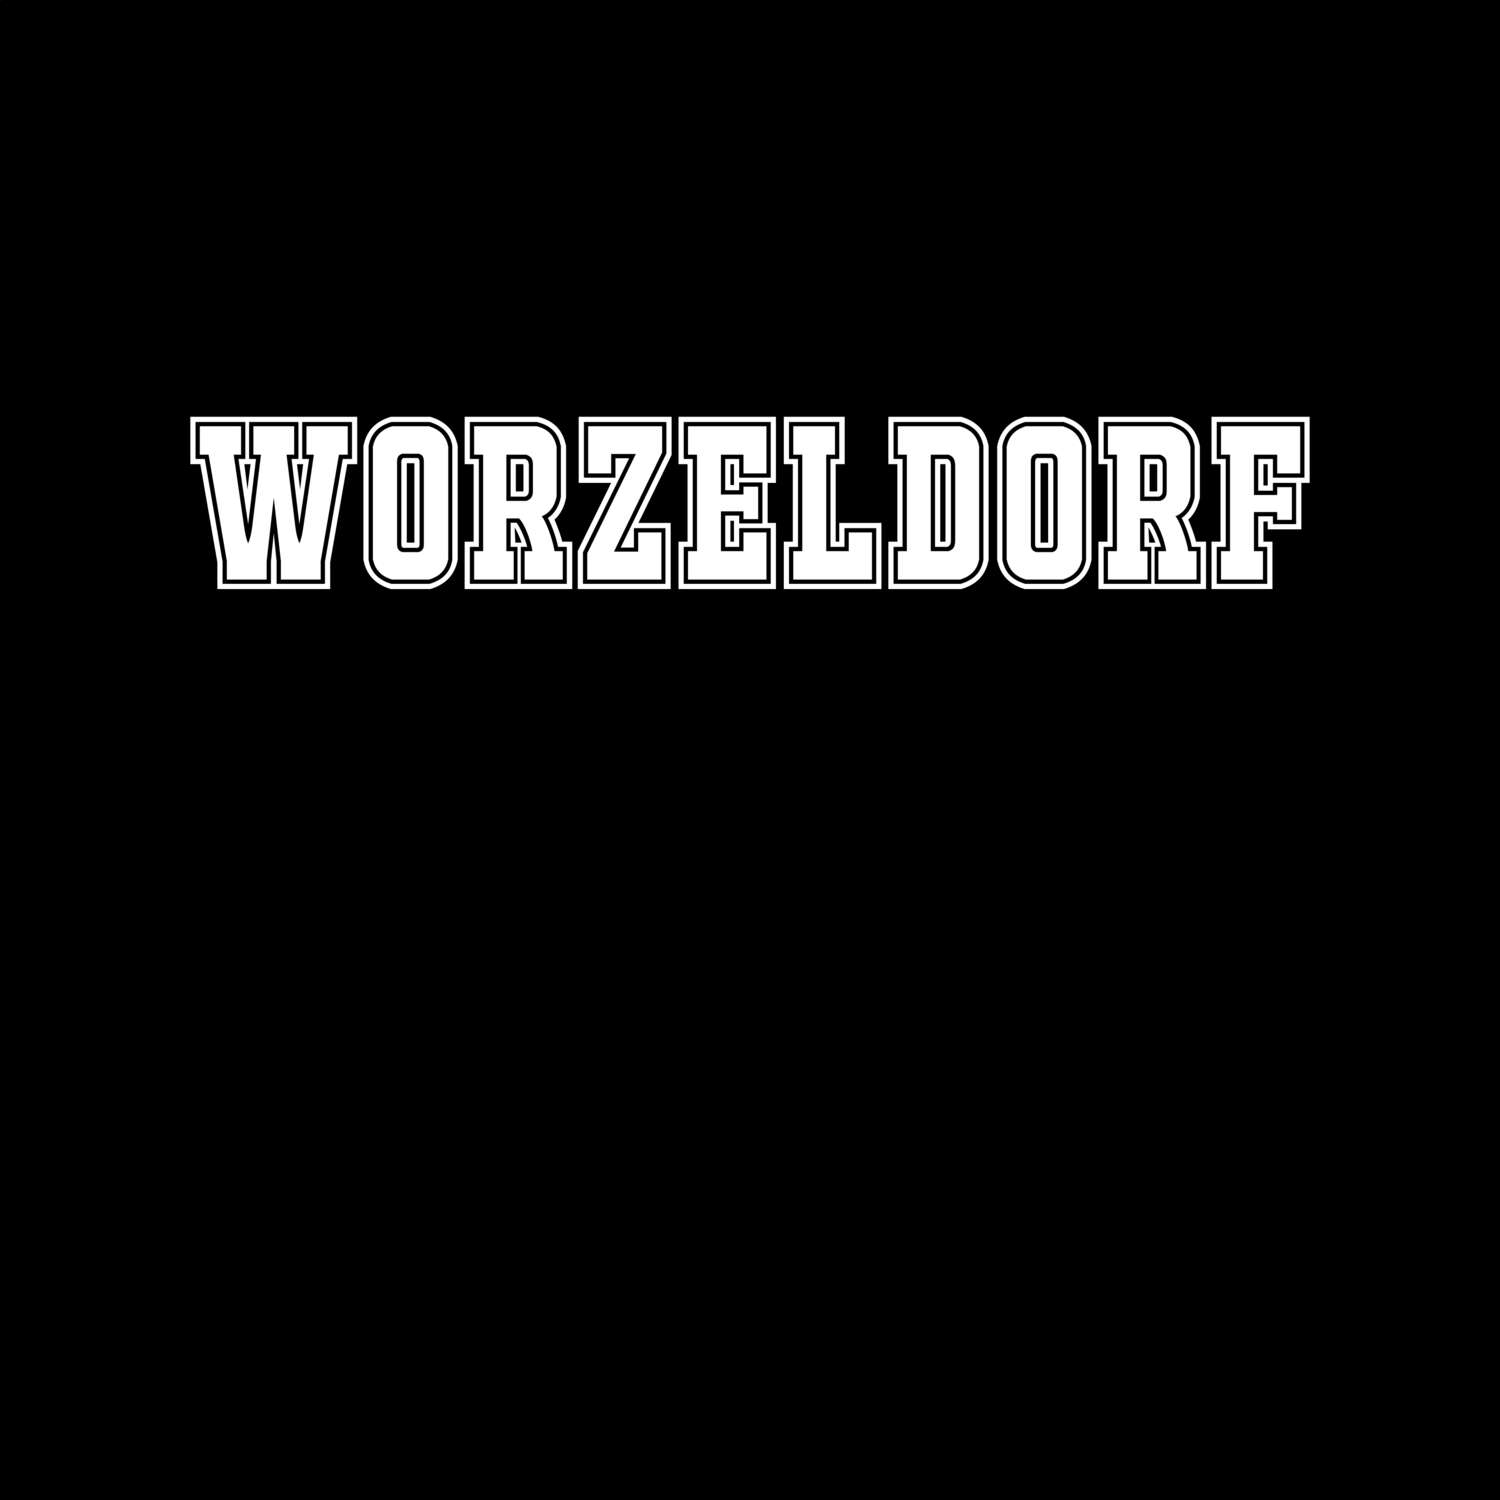 Worzeldorf T-Shirt »Classic«